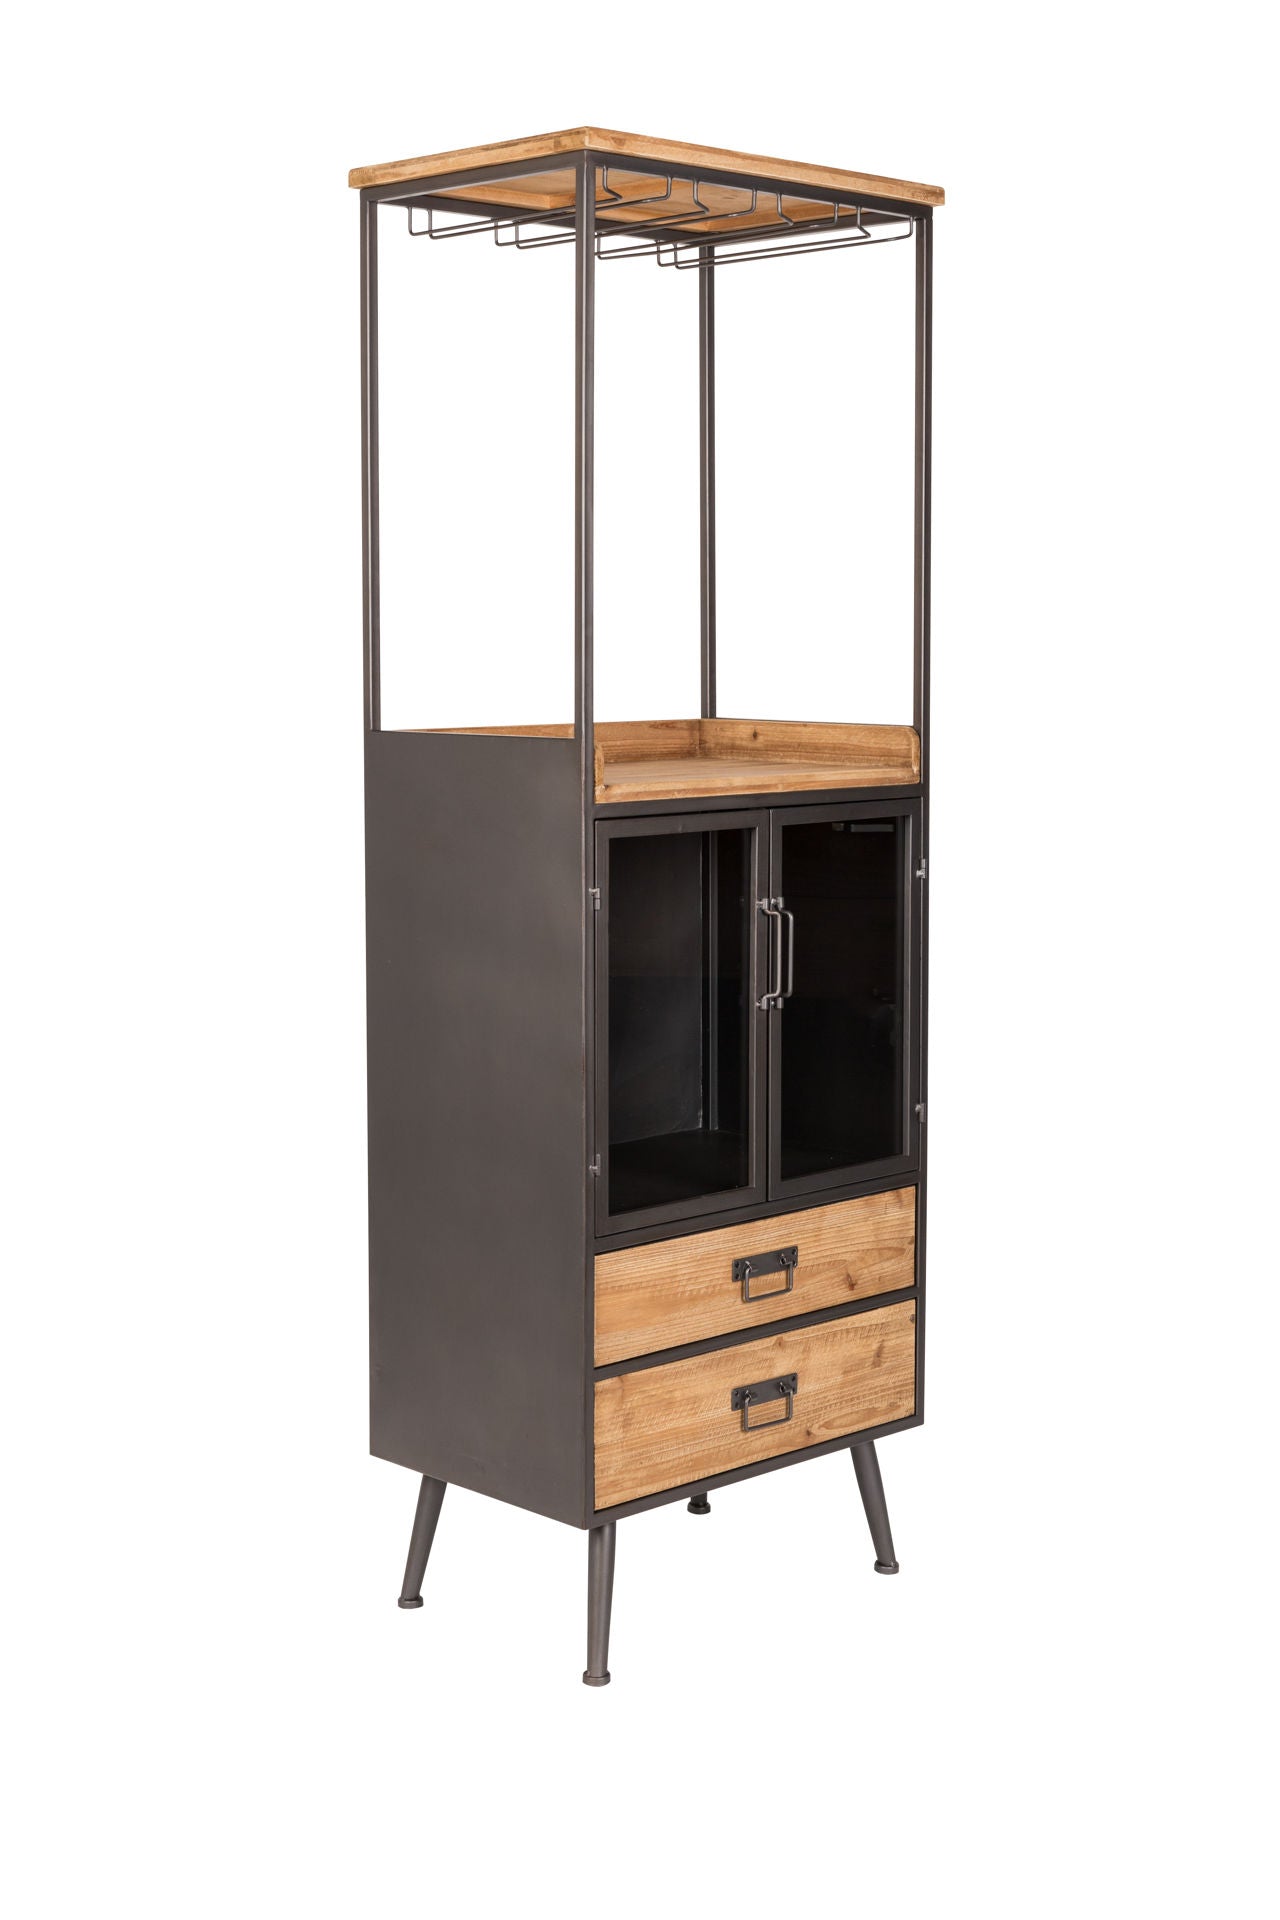 Nancy's Yeadon Cabinet - Industrial - Natural, Gray, Brown - Wood, Mdf, Iron - 40 cm x 60 cm x 171 cm